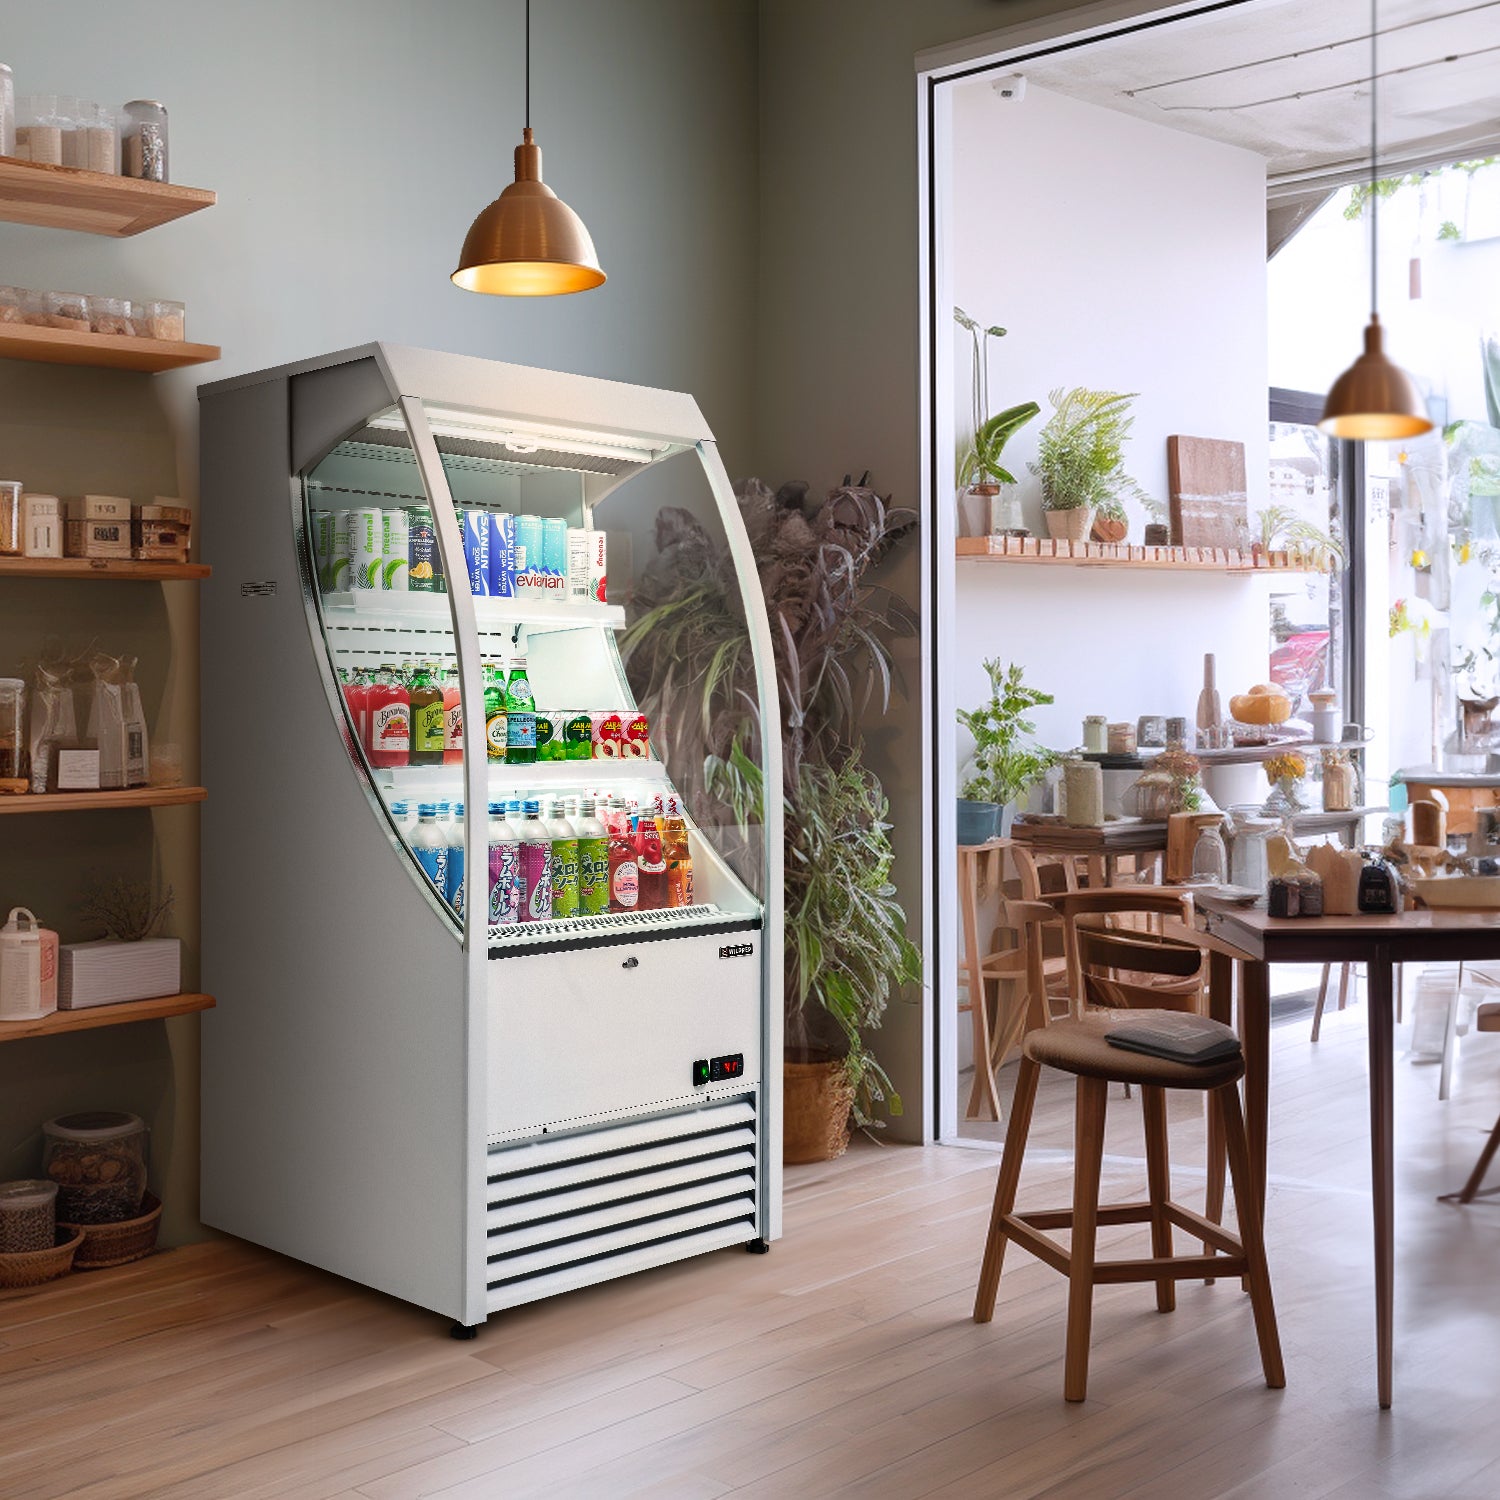 Wilprep 39-inch open air display refrigerators